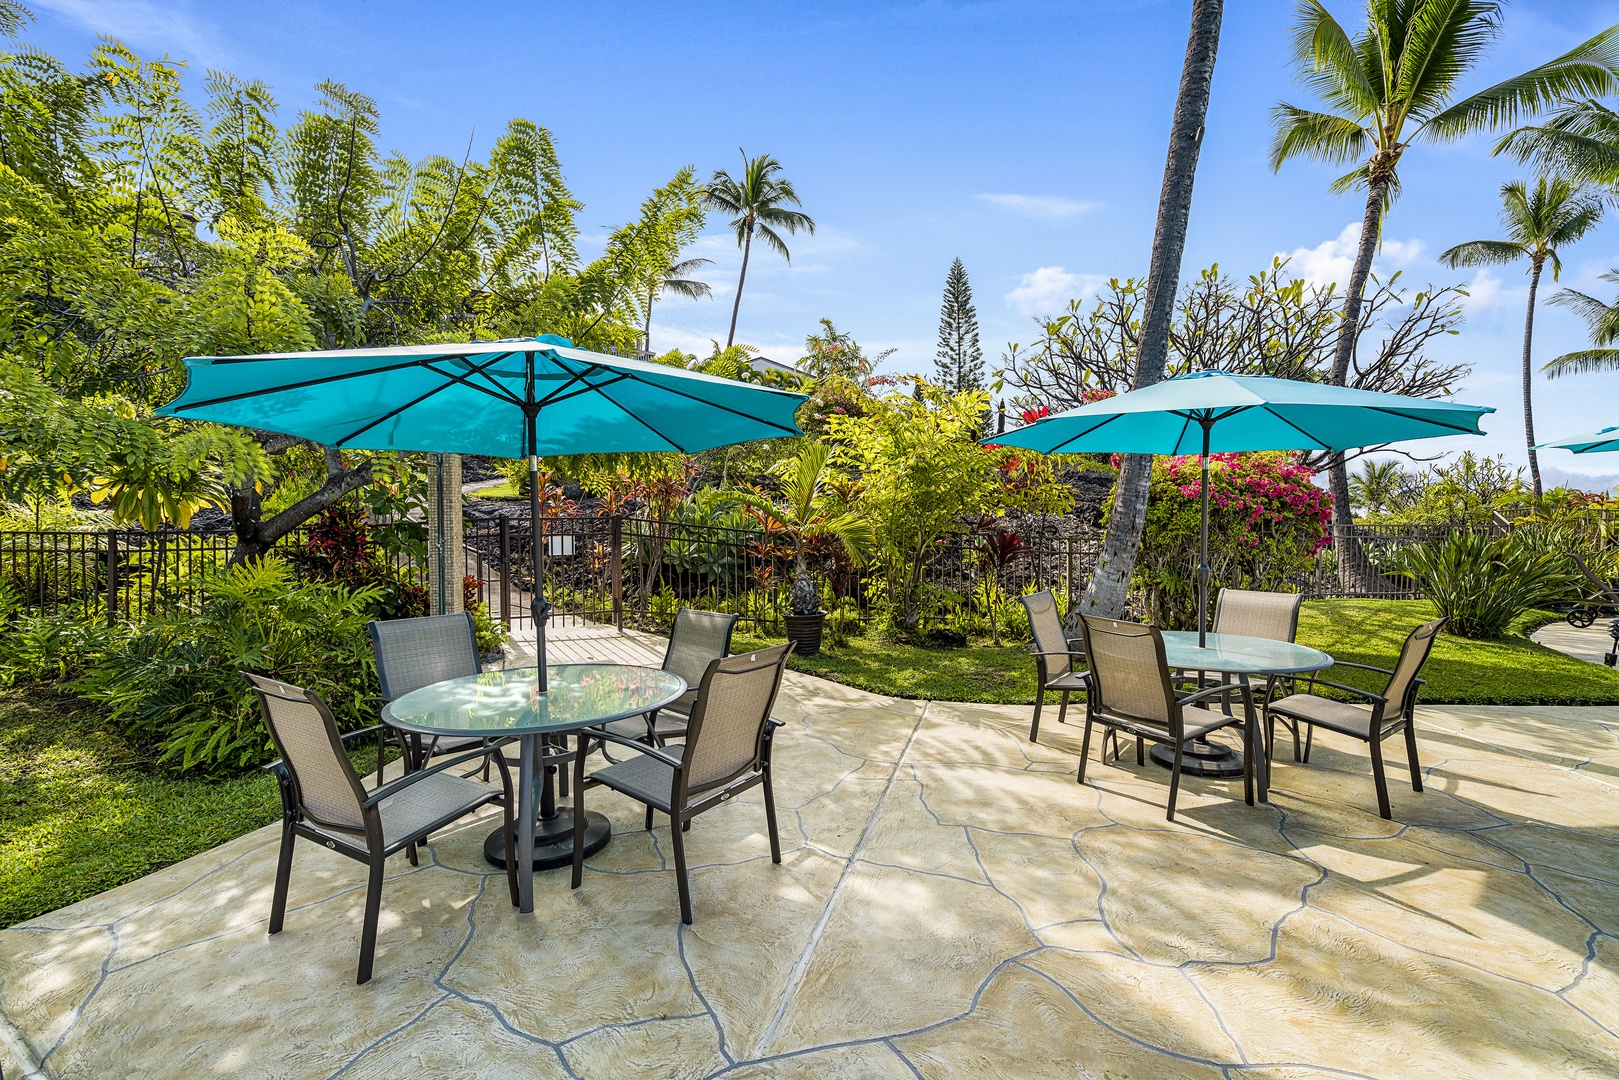 Kailua-Kona Vacation Rentals, Keauhou Resort 116 - Pool Side dining!